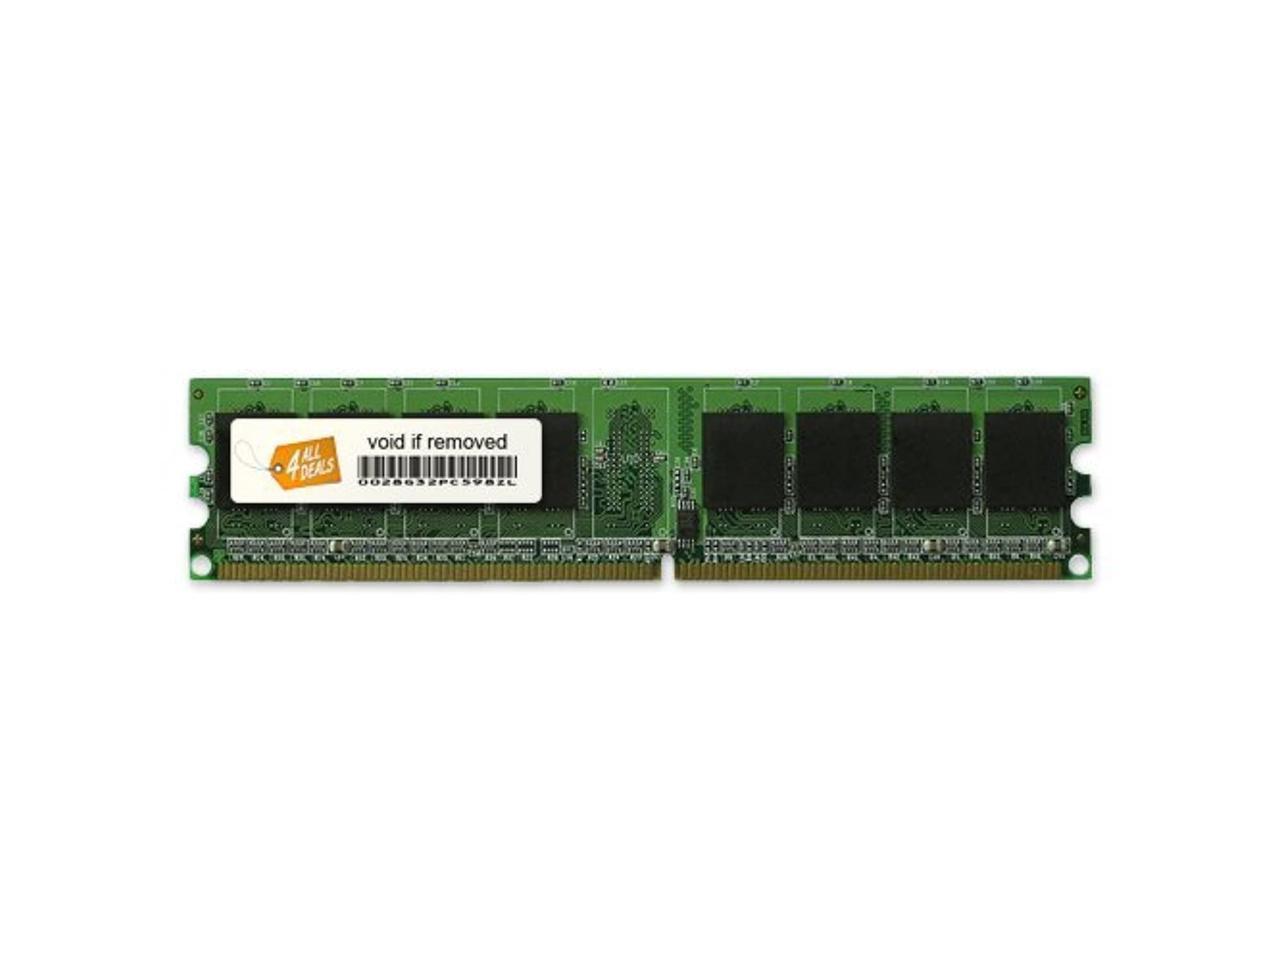 PC2700 RAM Memory Upgrade for The Toshiba Portege M200 Series M200 PPM21U-16D3K4 1GB DDR-333